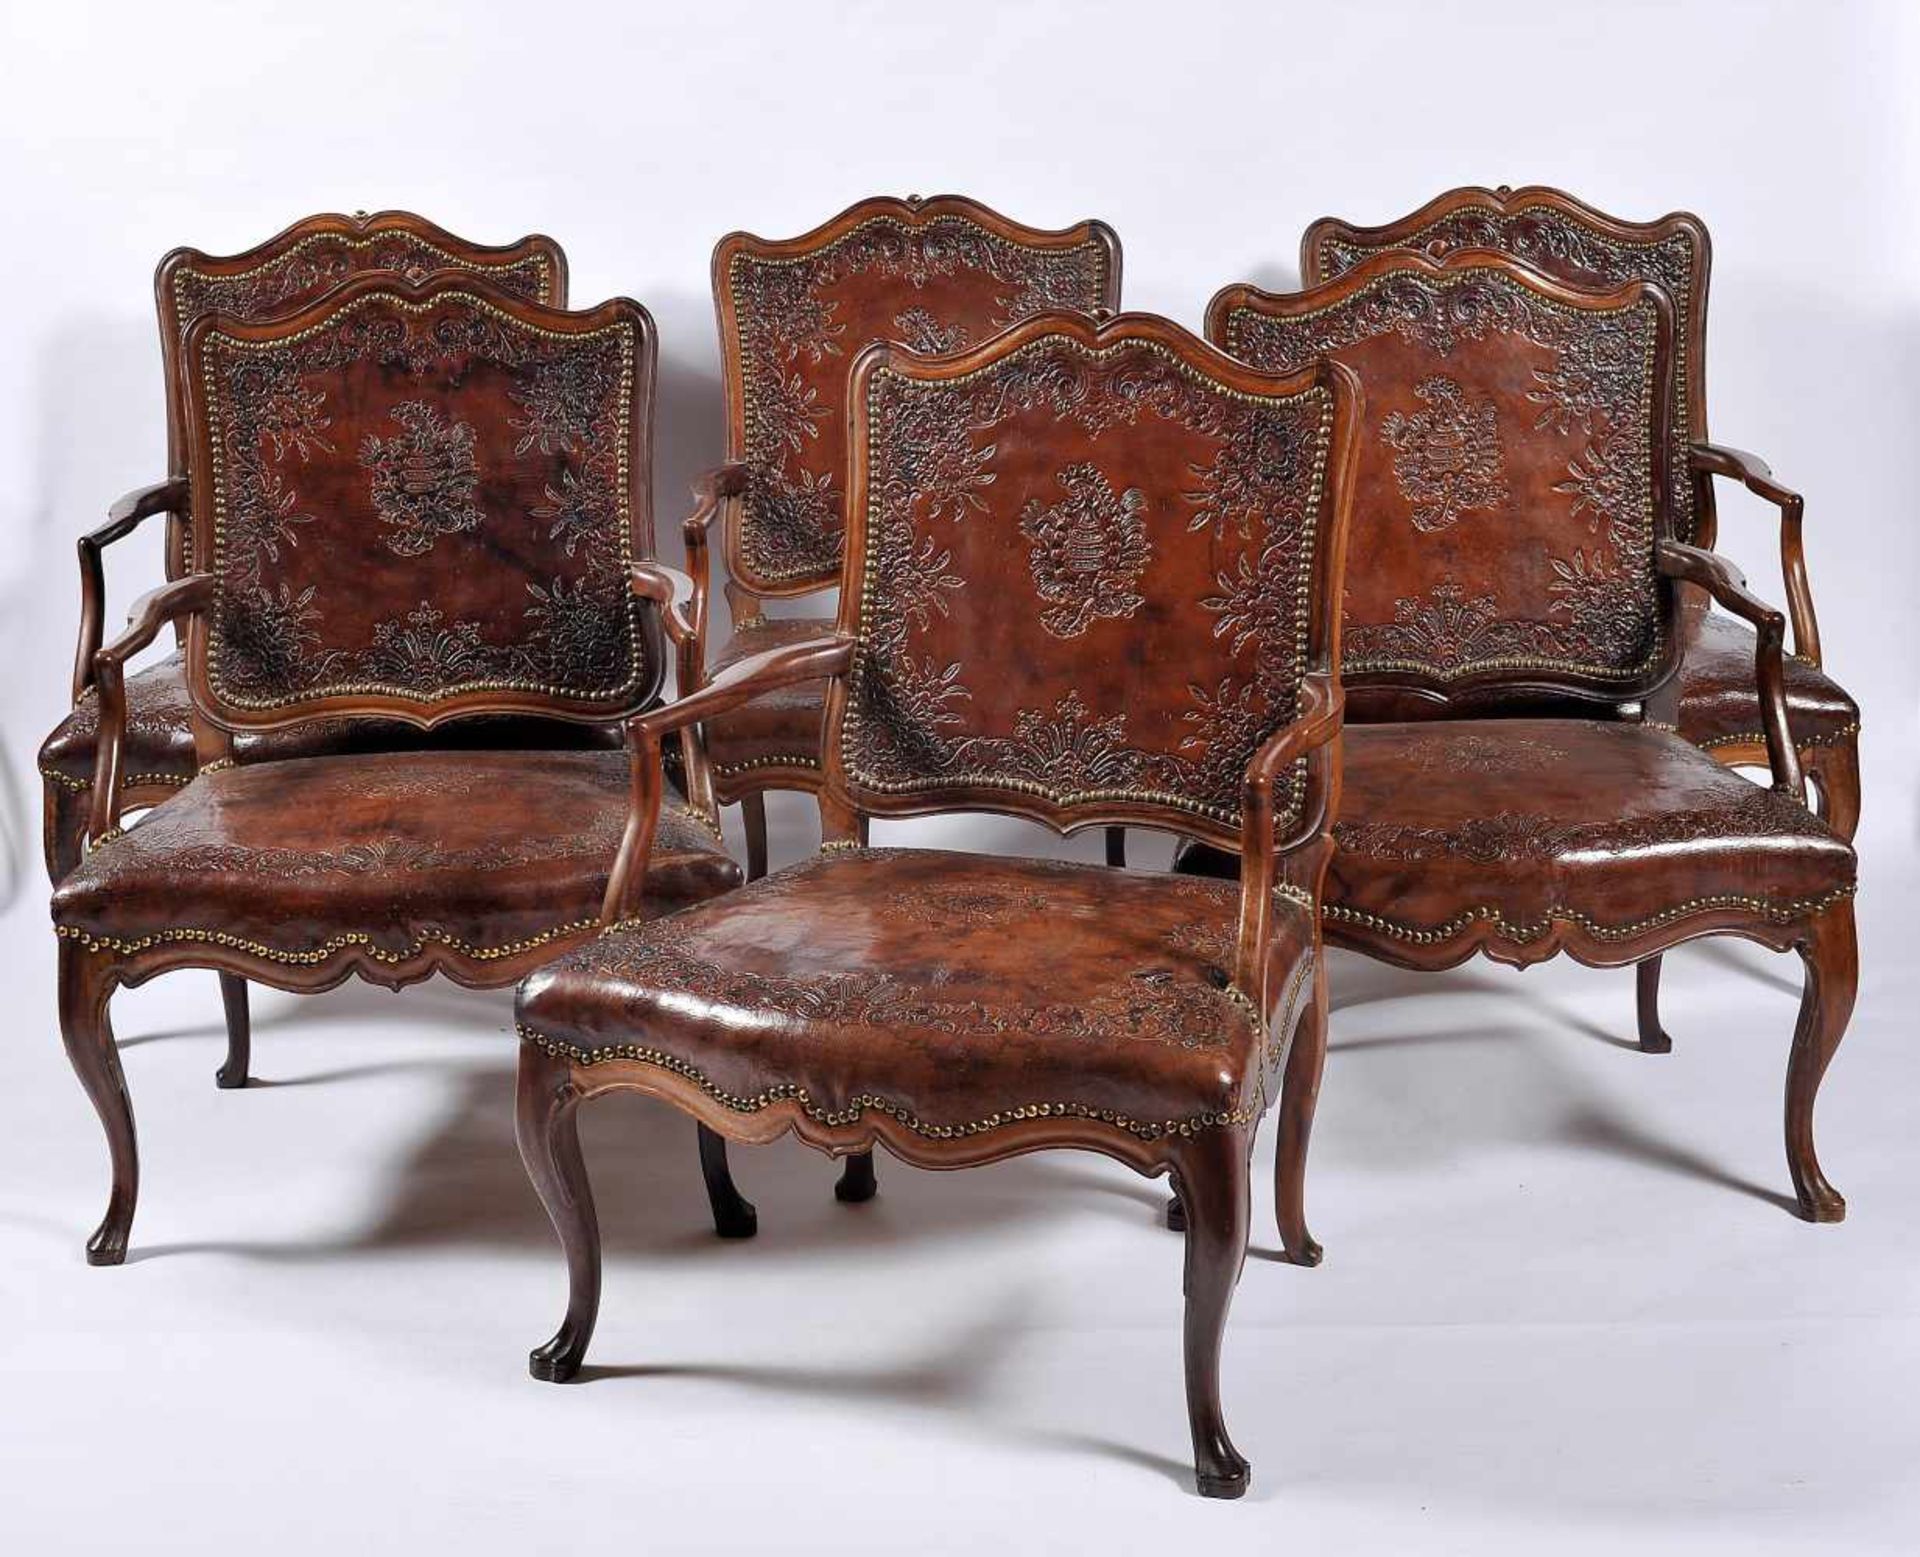 A Set of Six Fauteuils (Armchairs)